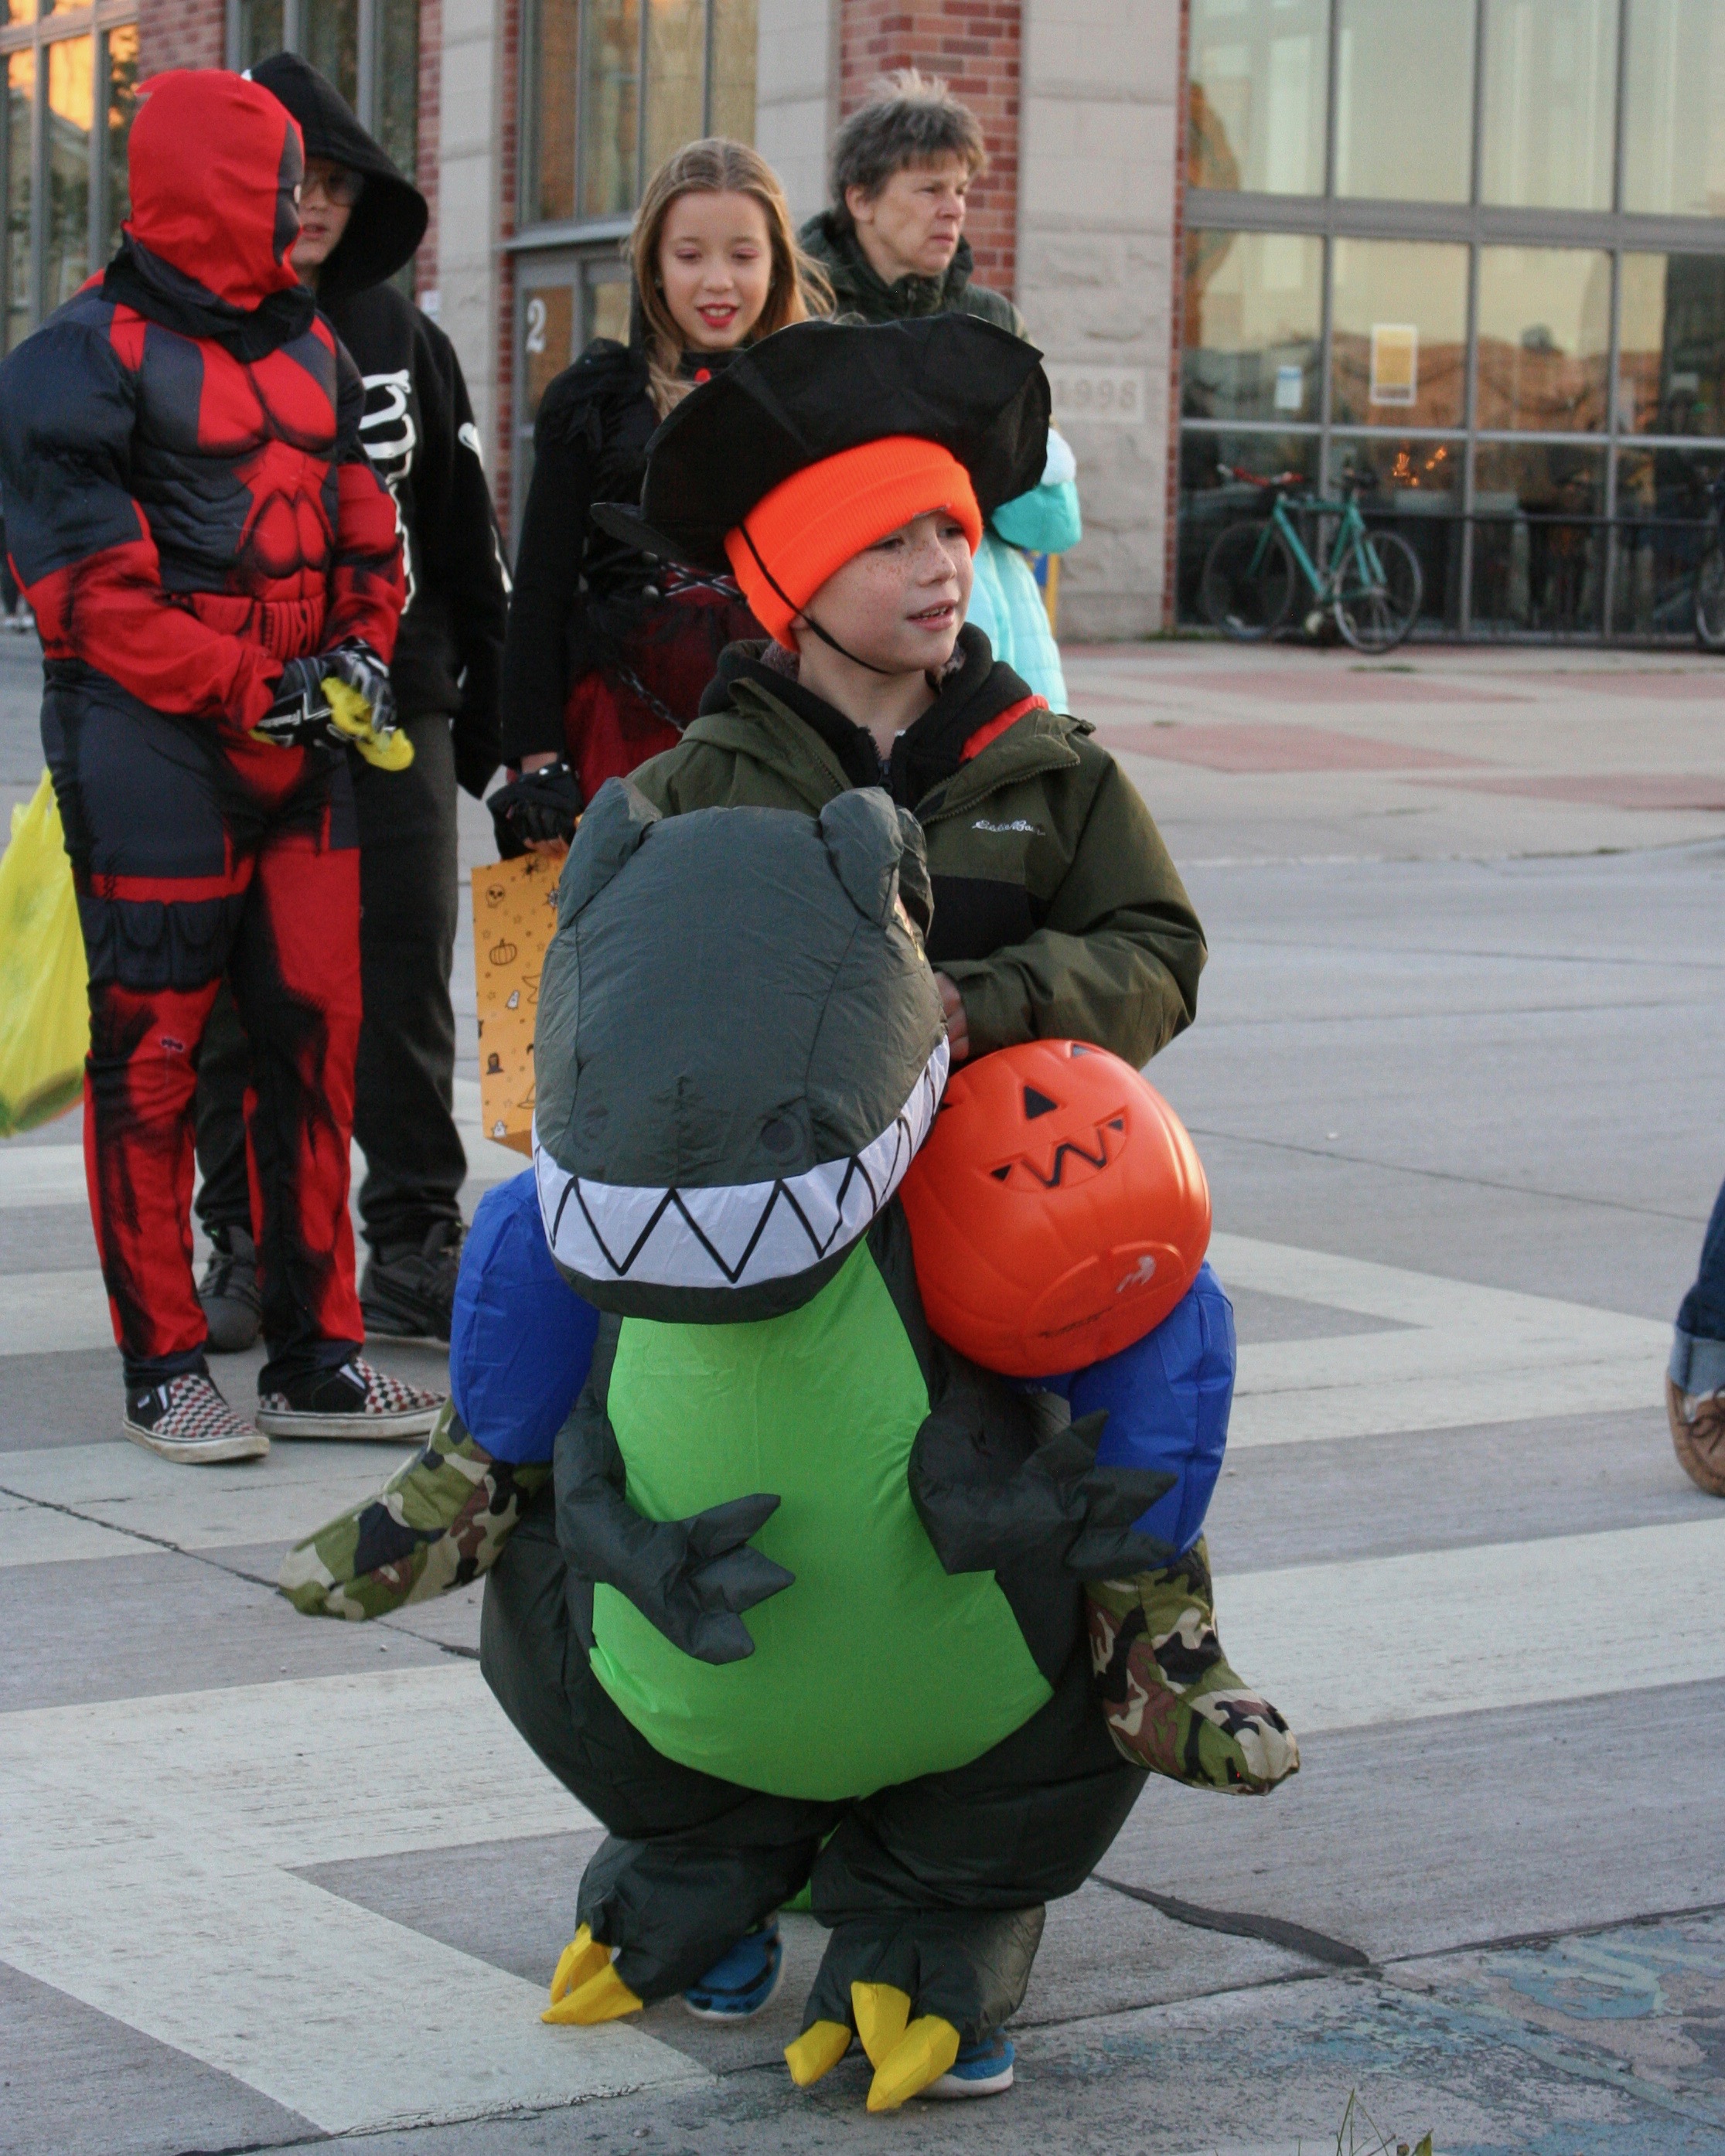 Child wearing "riding a dinosaur" costume